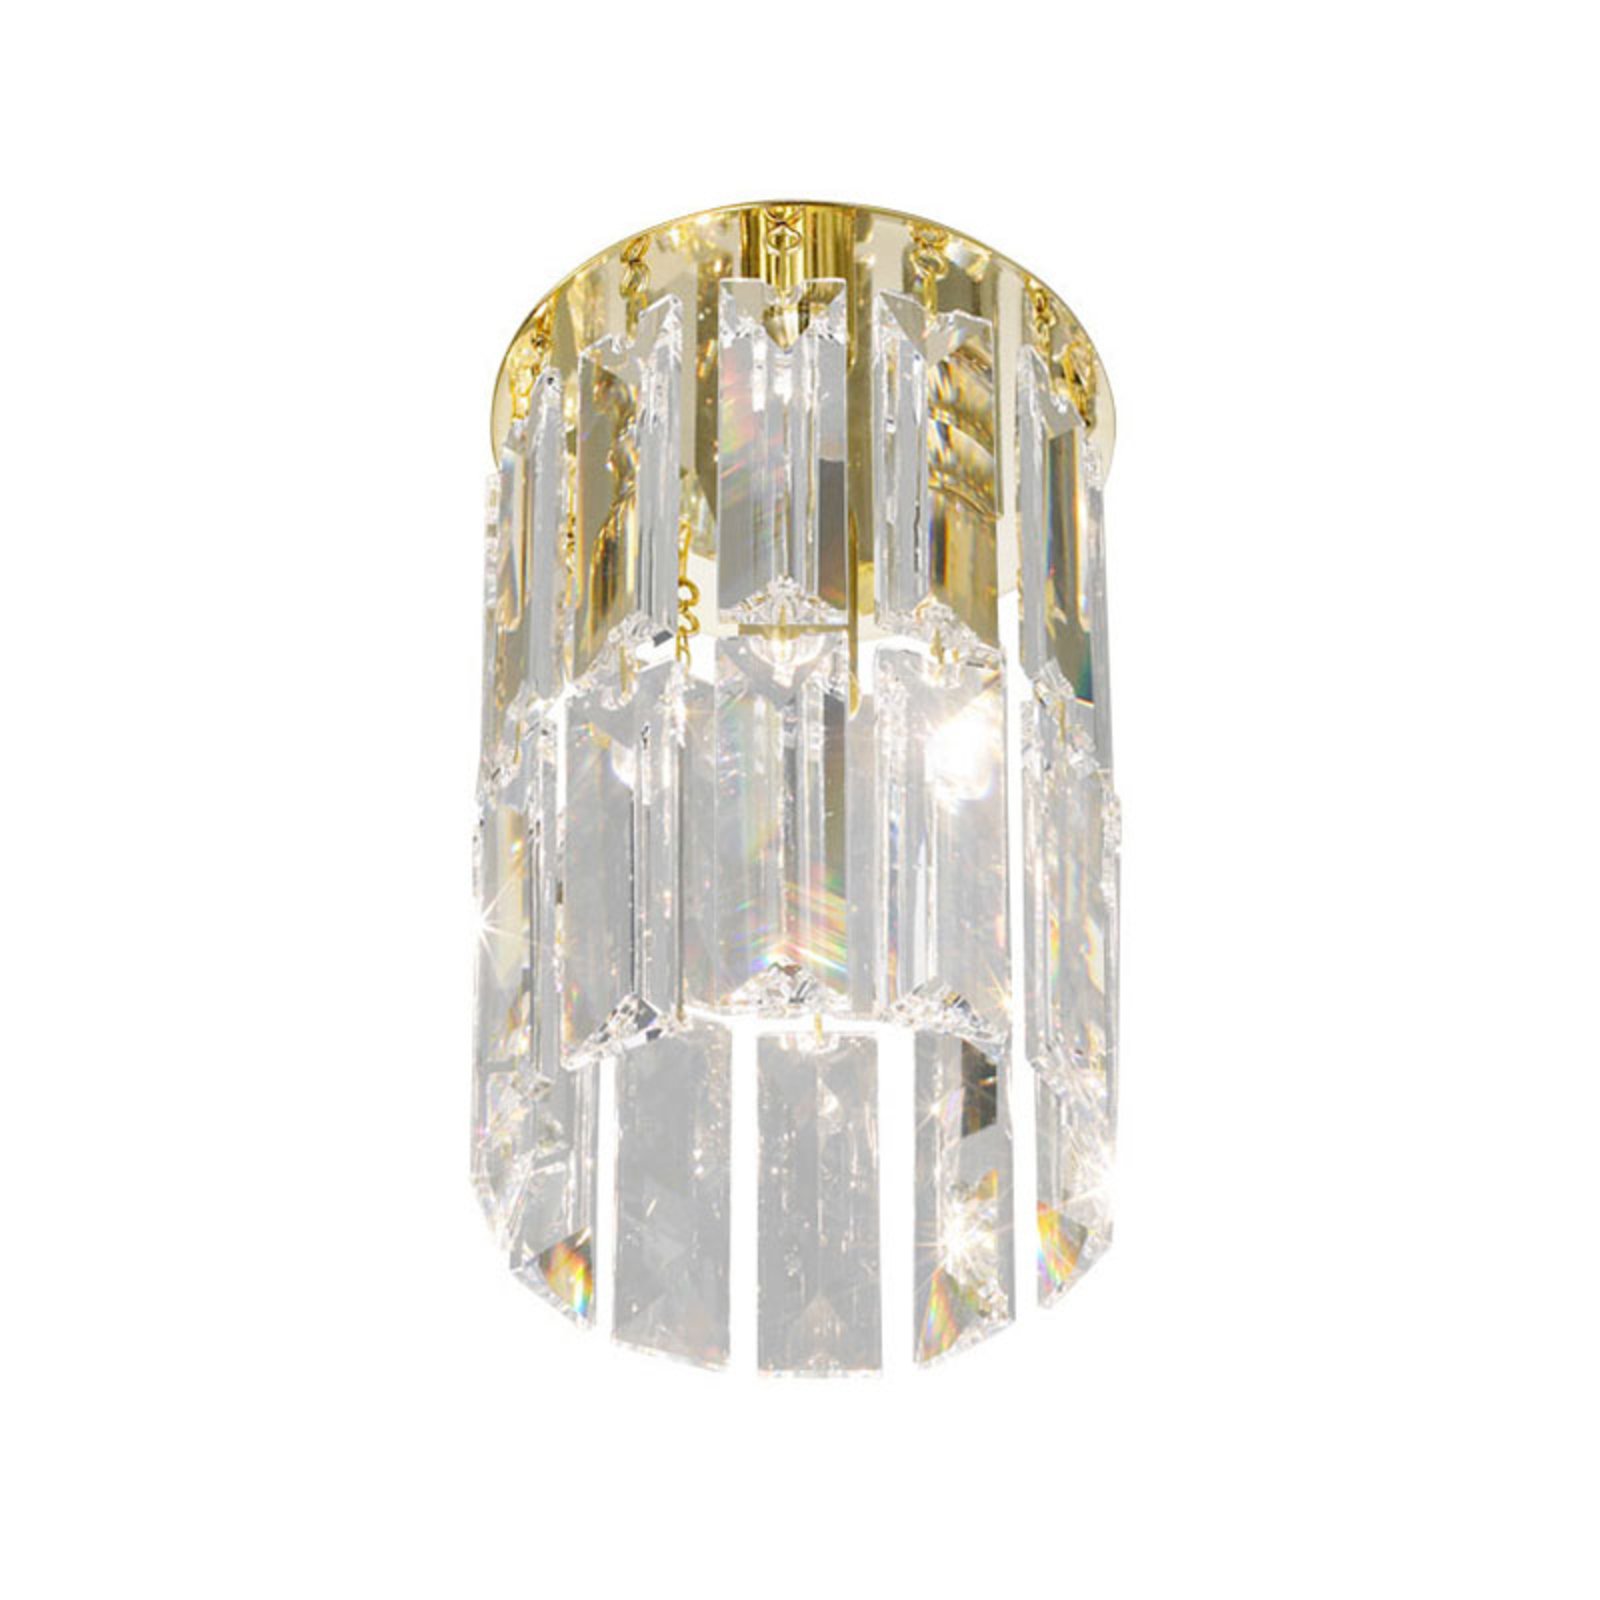 KOLARZ Prisma plafondlamp, kristal en goud 24 kt